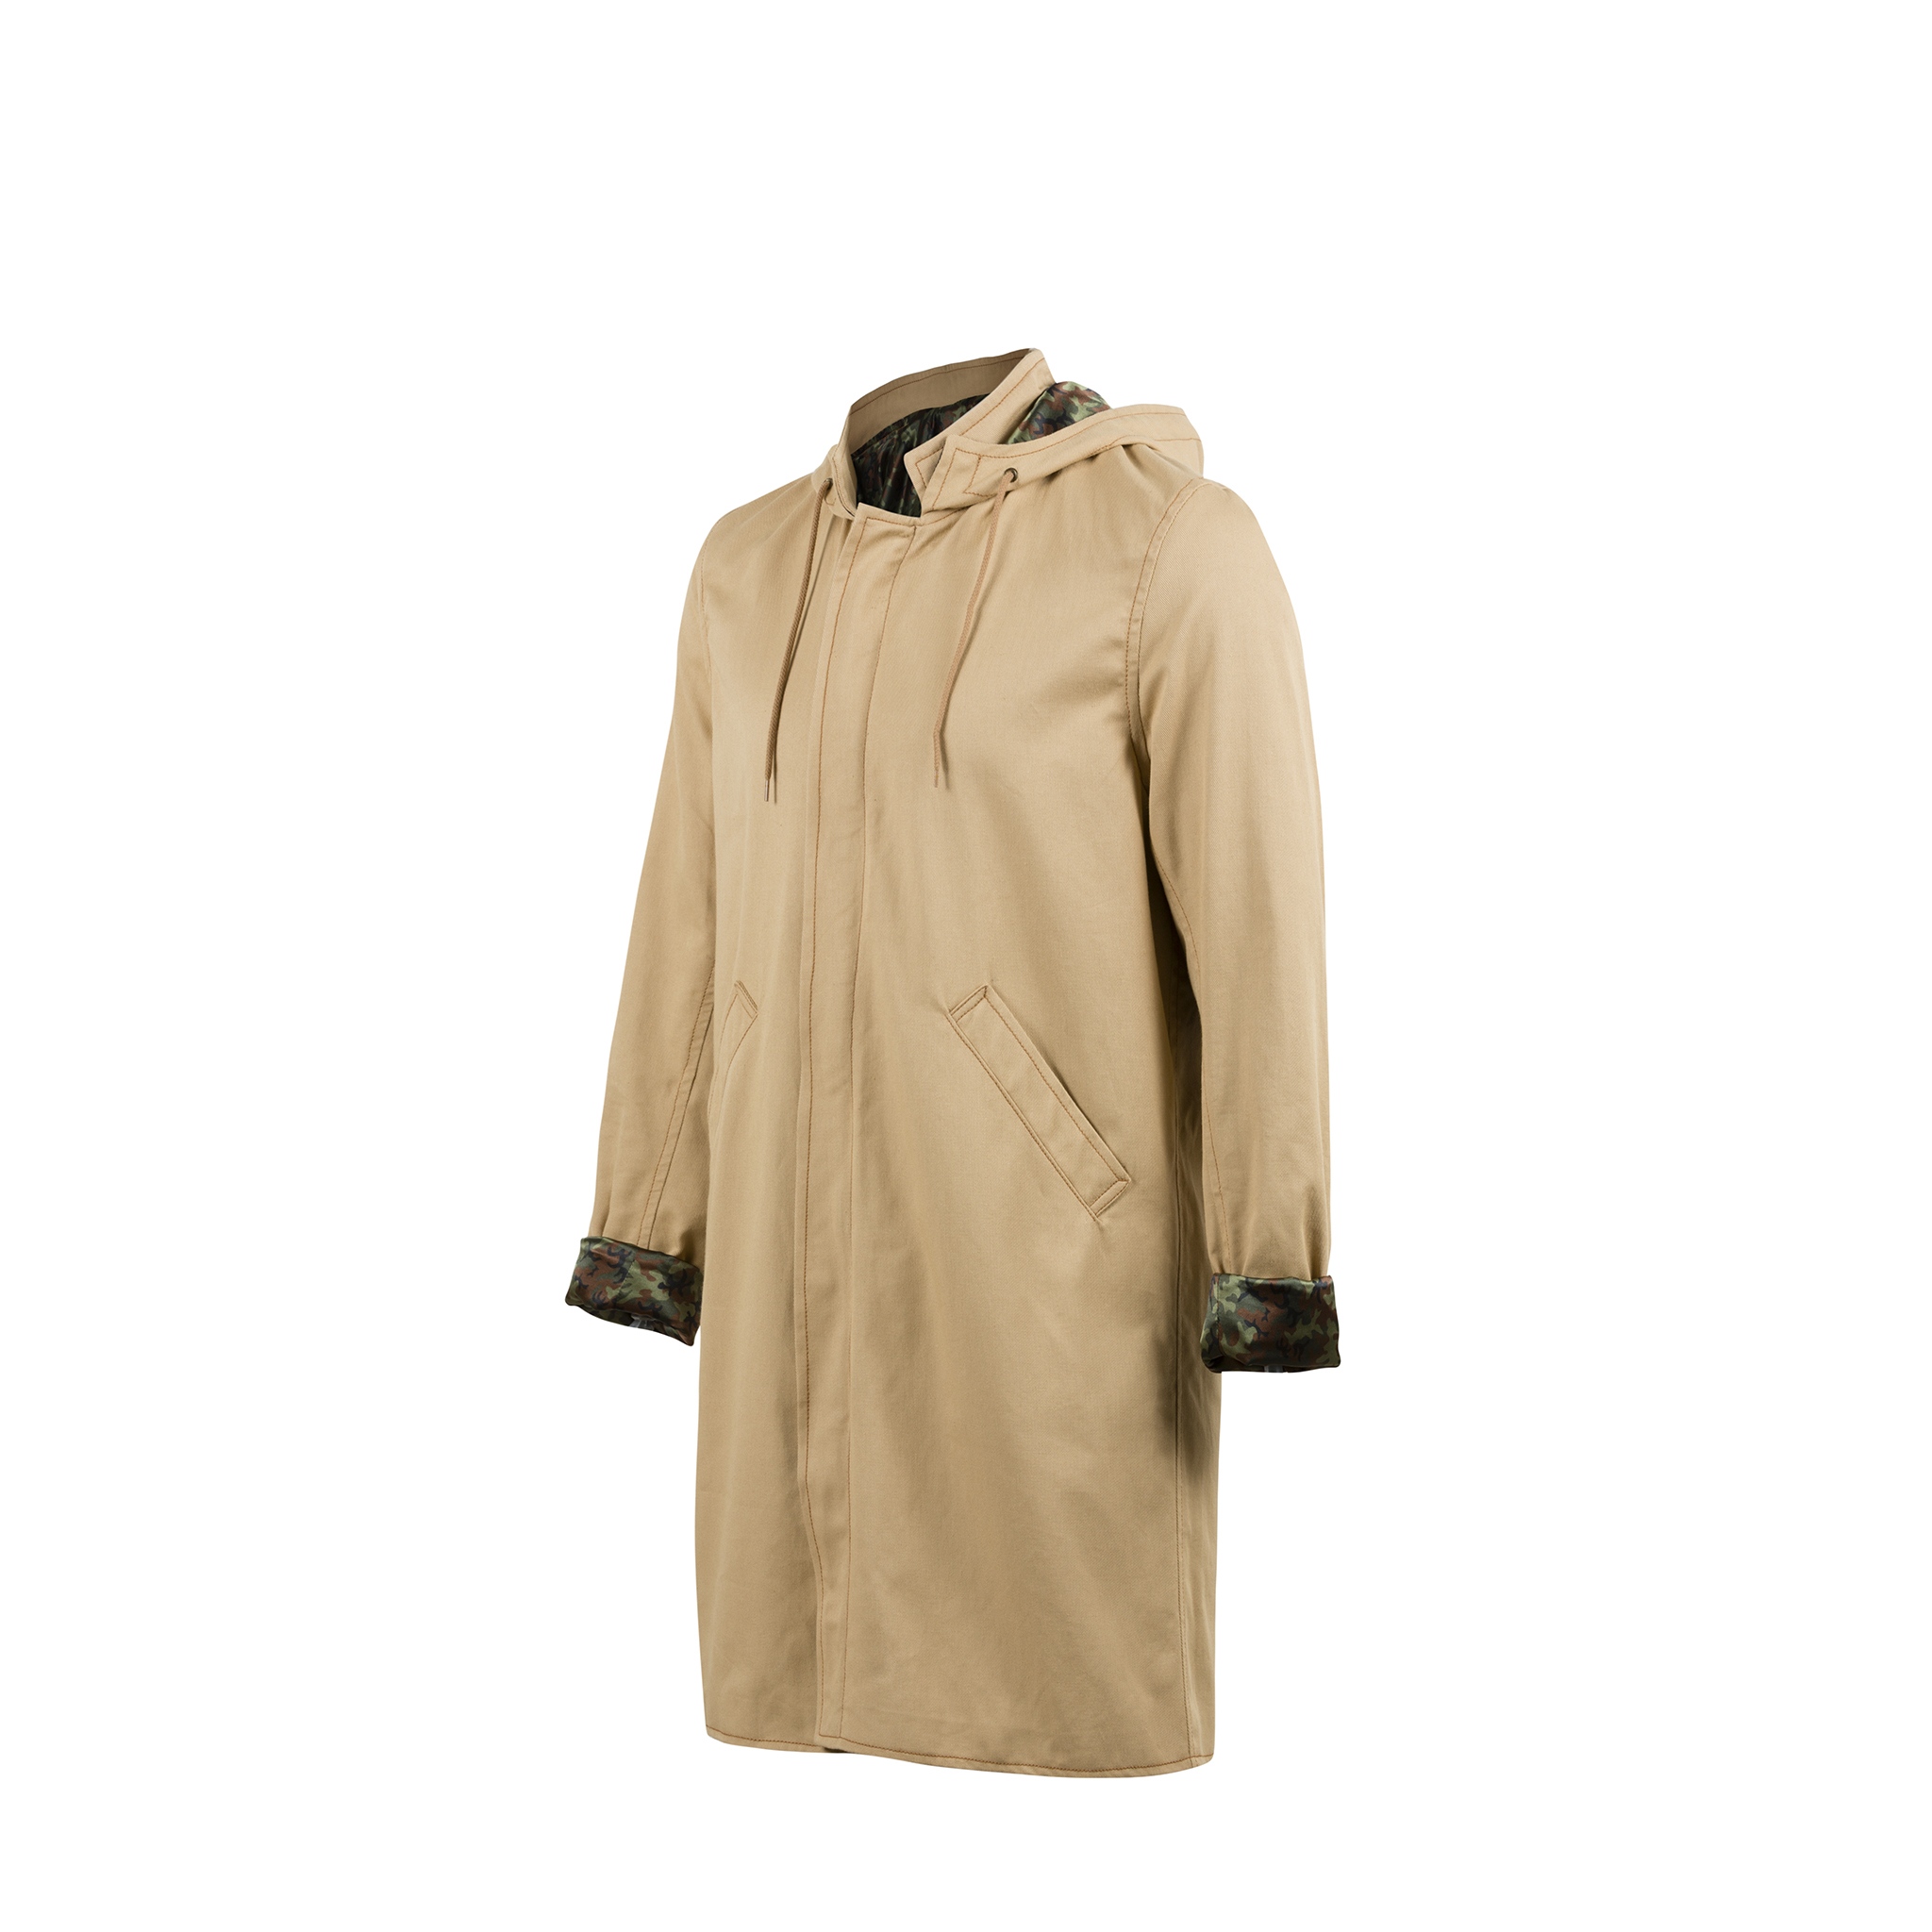 Raincoat - Camouflage lining - Cotton gabardine - Beige color